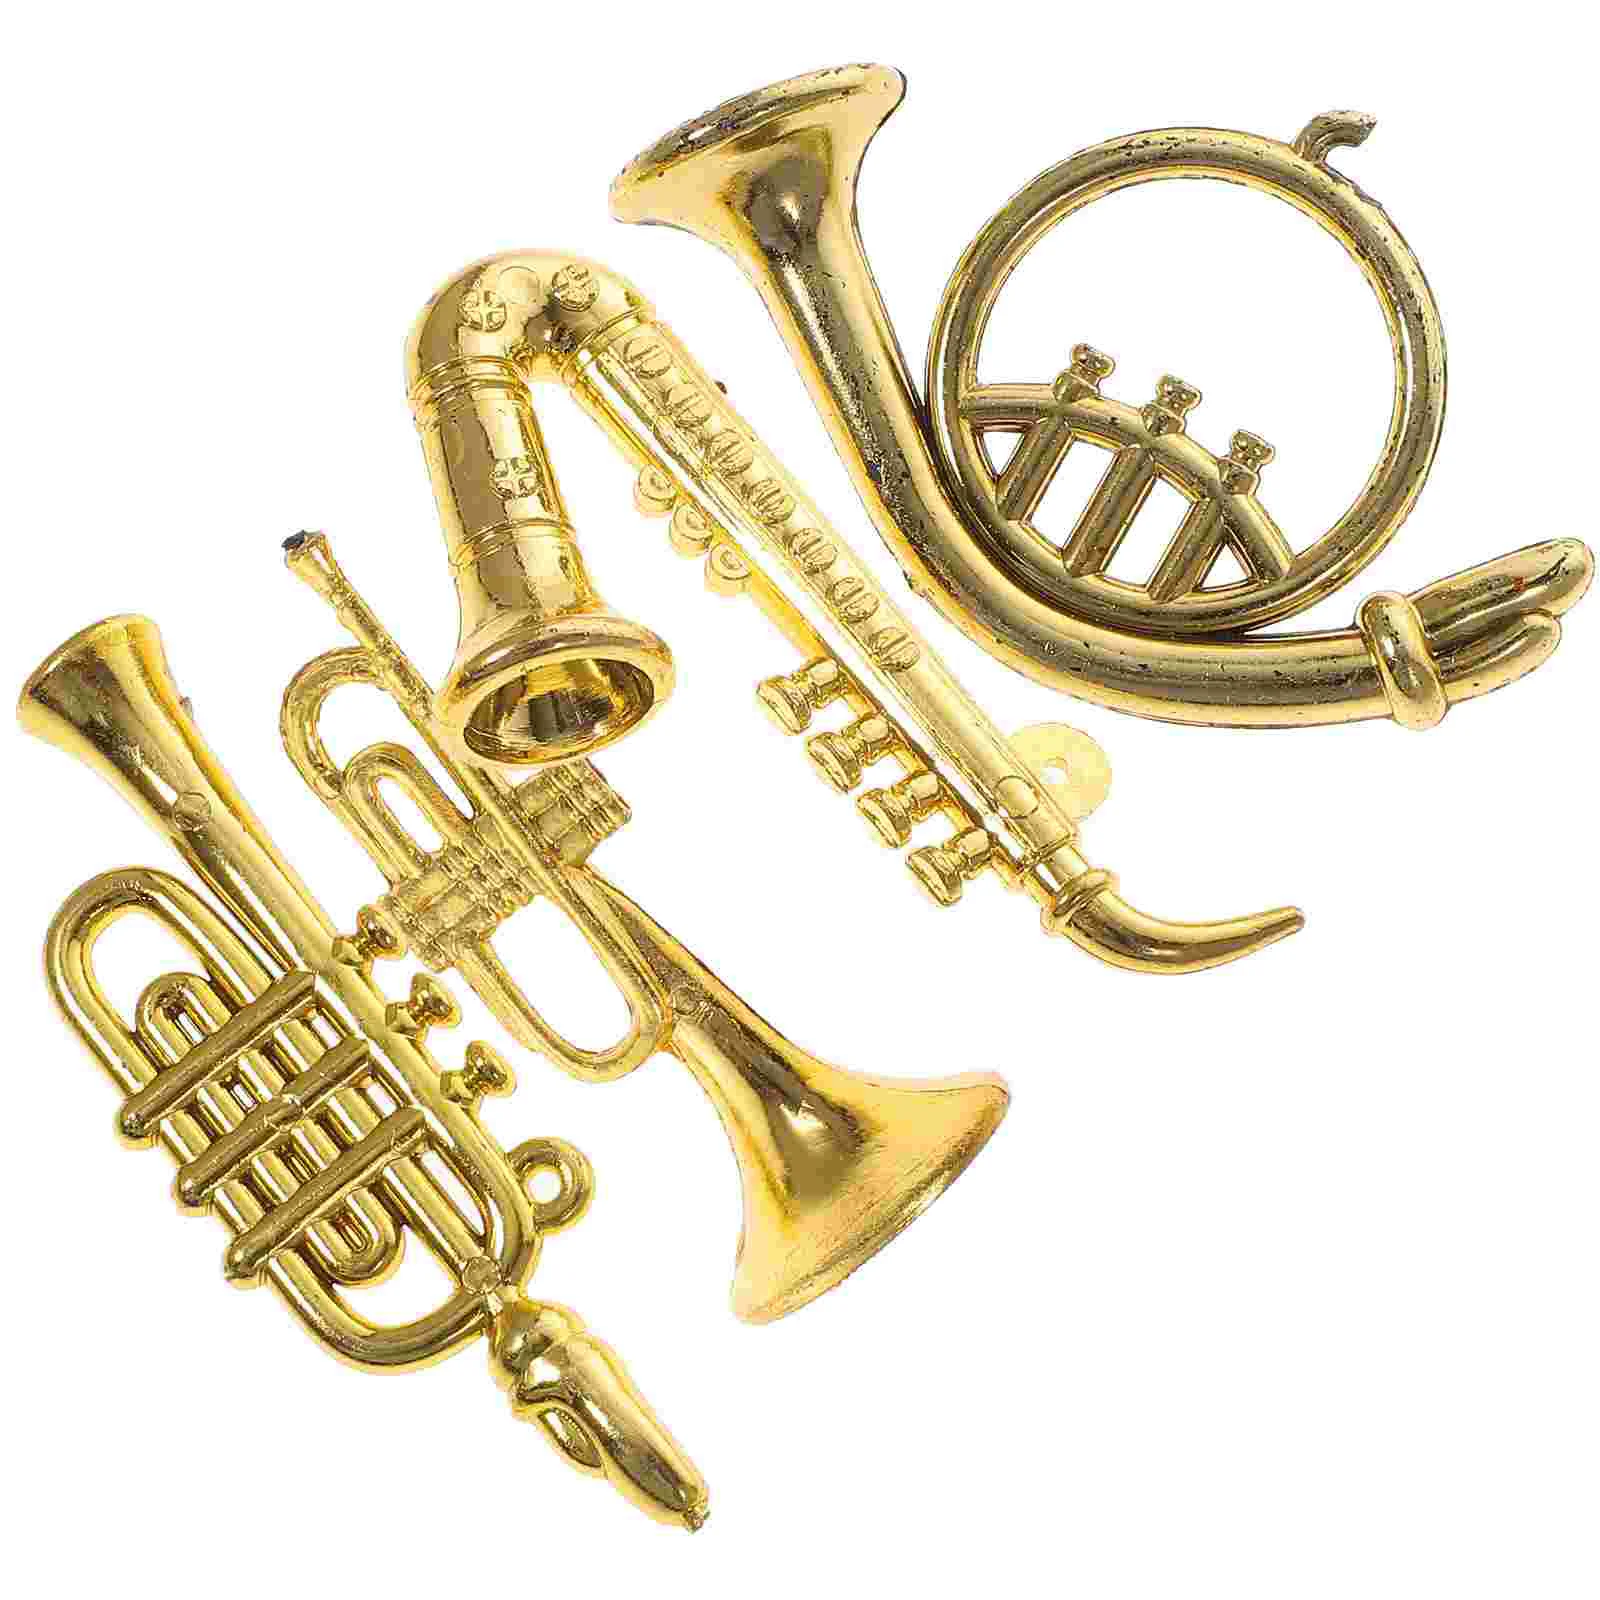 

Model Mini Instrument Saxophone Musical Miniature Trumpet 3D Toy Kidsinstruments Trombone Toys House Ornament Clarinet Classical